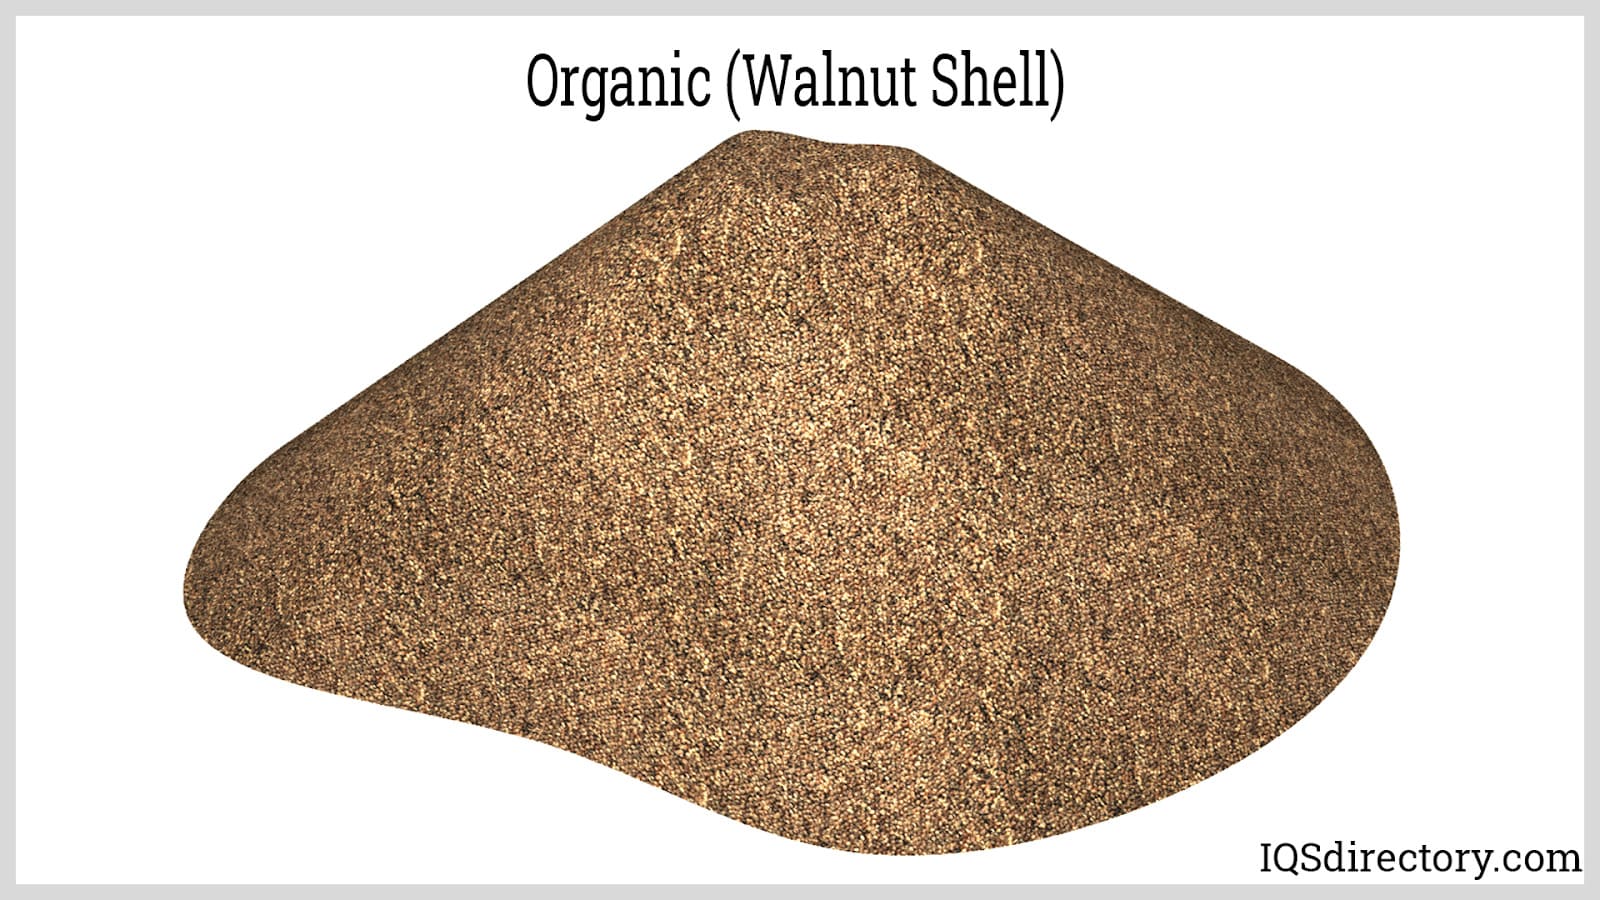 Organic (Walnut Shell)